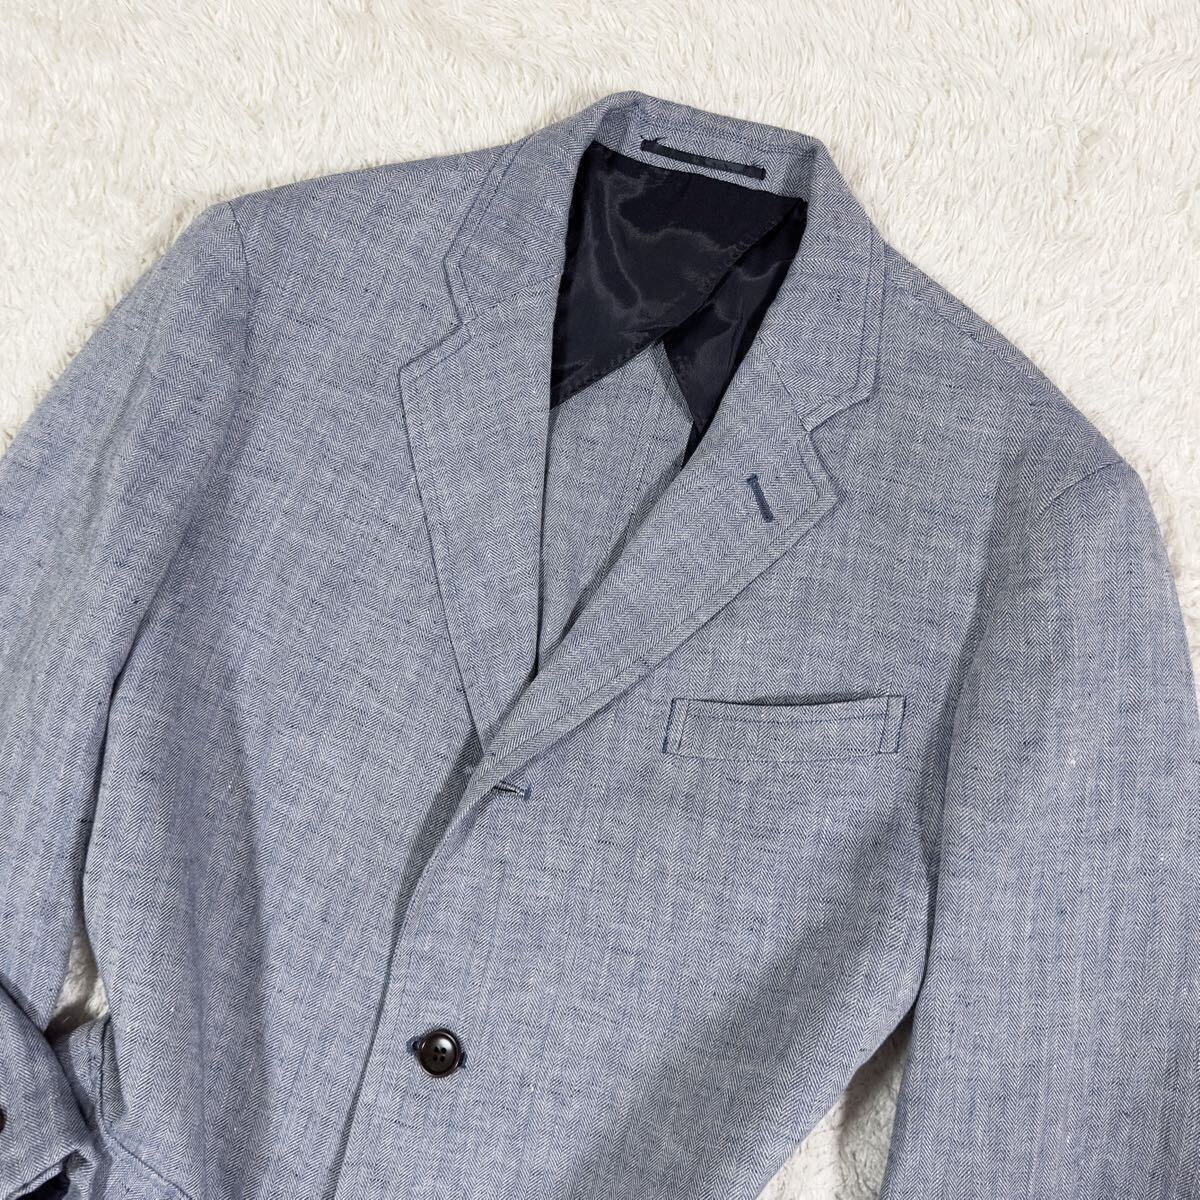  J Press [ gentleman. stylish ]J.PRESS×AIR LINEN tailored Anne navy blue jacket herringbone linen flax light blue L size spring summer 